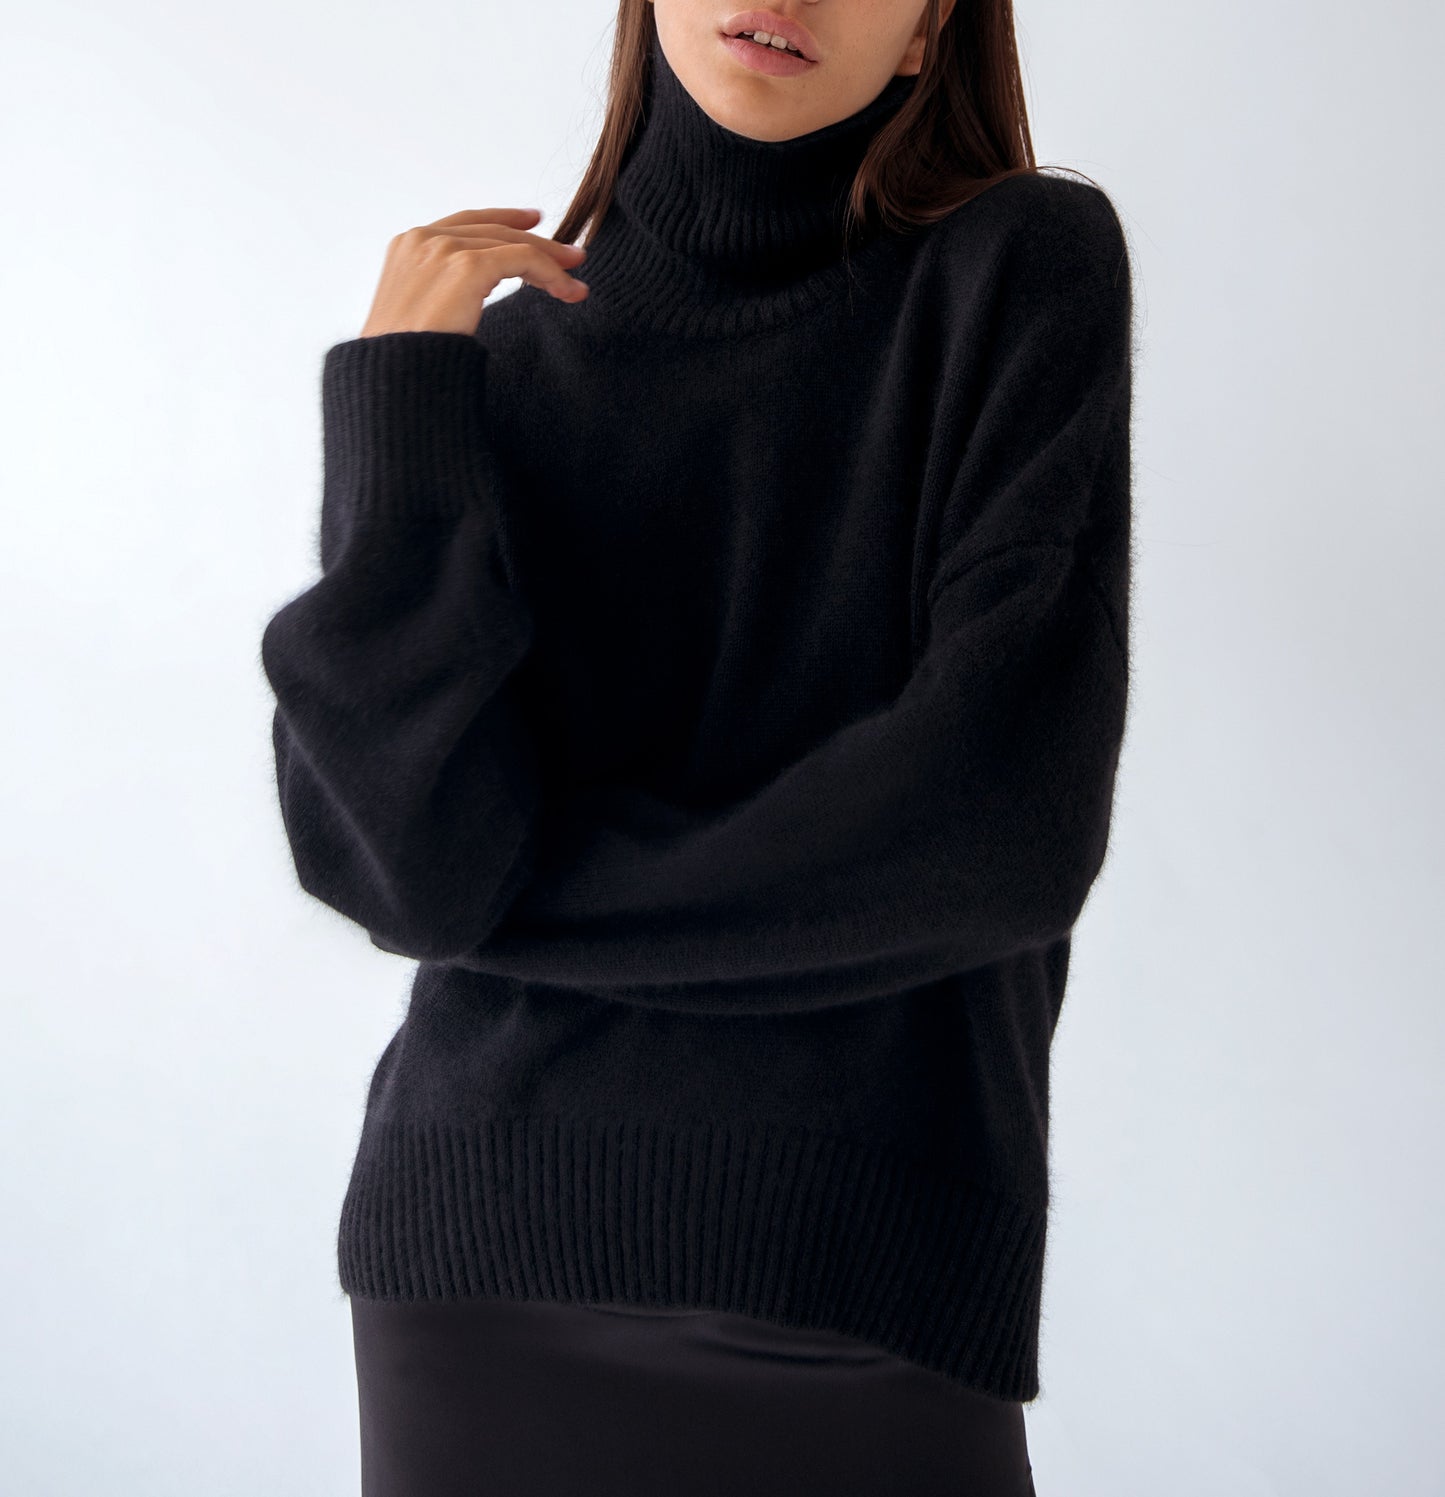 Autumn Winter Popular High Collar Loose Knitwear Sweater for Women